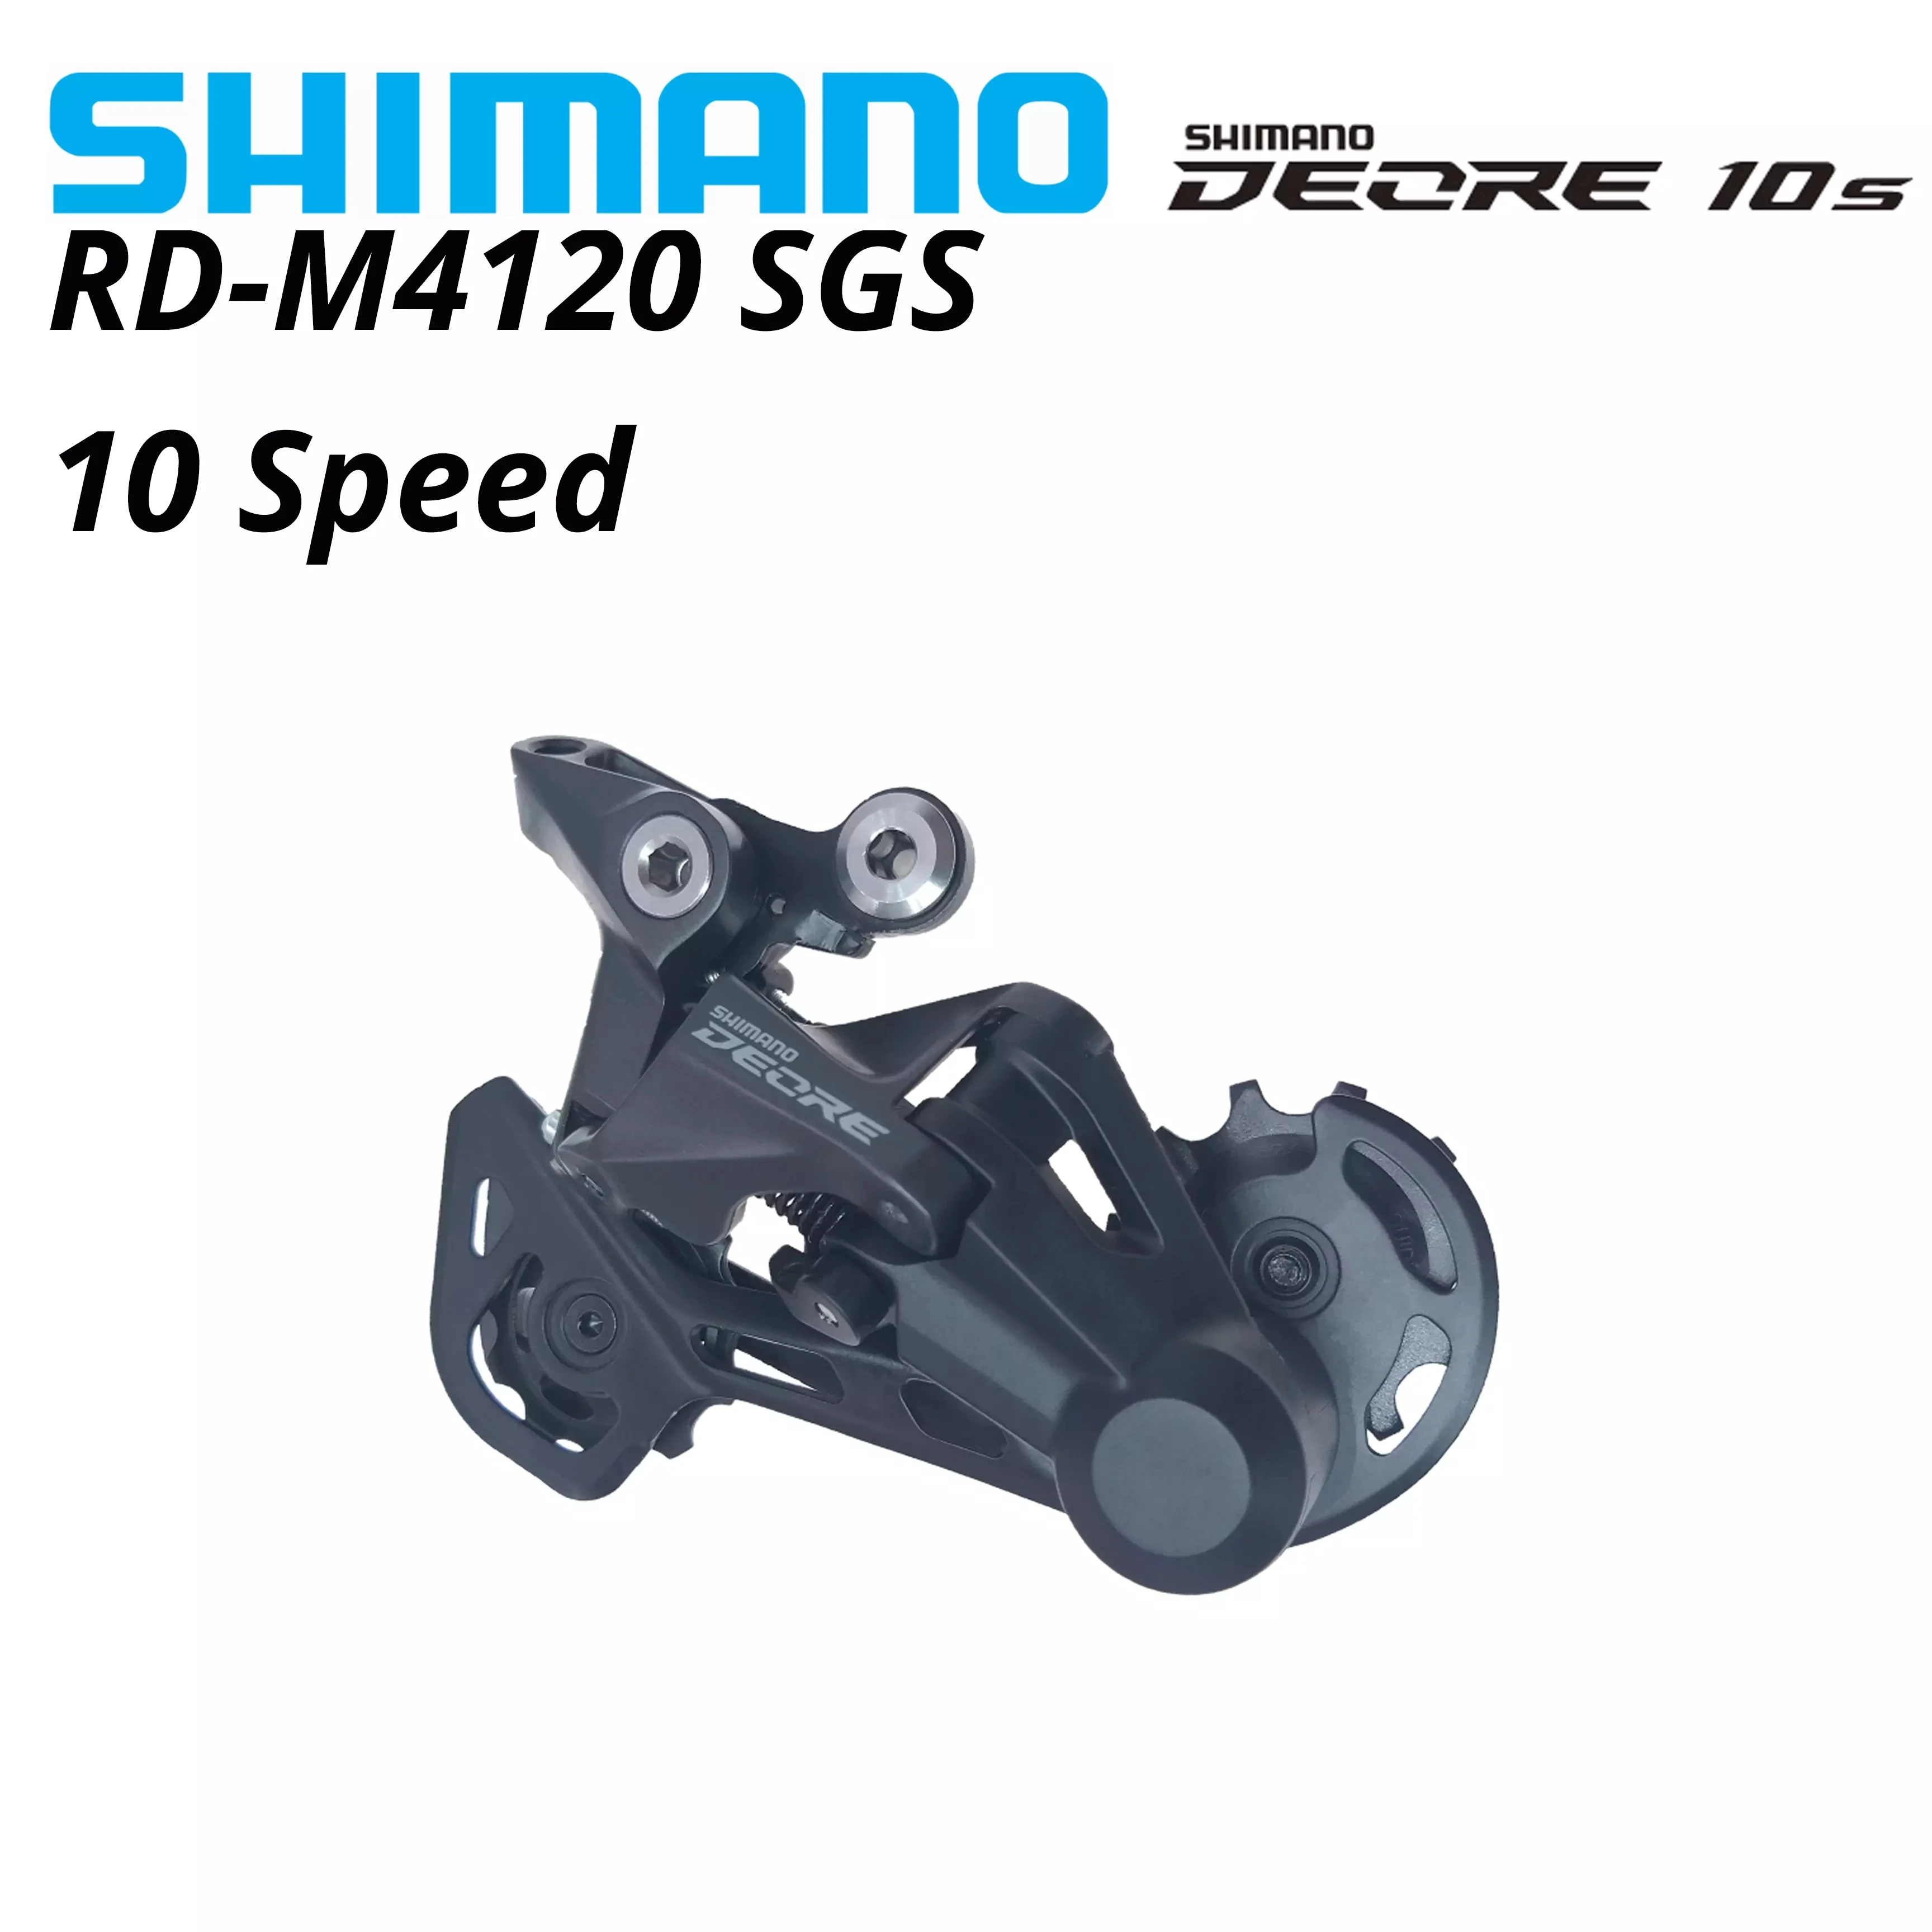 

SHIMANO DEORE RD M4120 Rear Derailleur SHIMANO SHADOW RD-M4120 SGS 2x10/11 speed Mountain Bike exchange MTB bicycle 10s 10v 11s